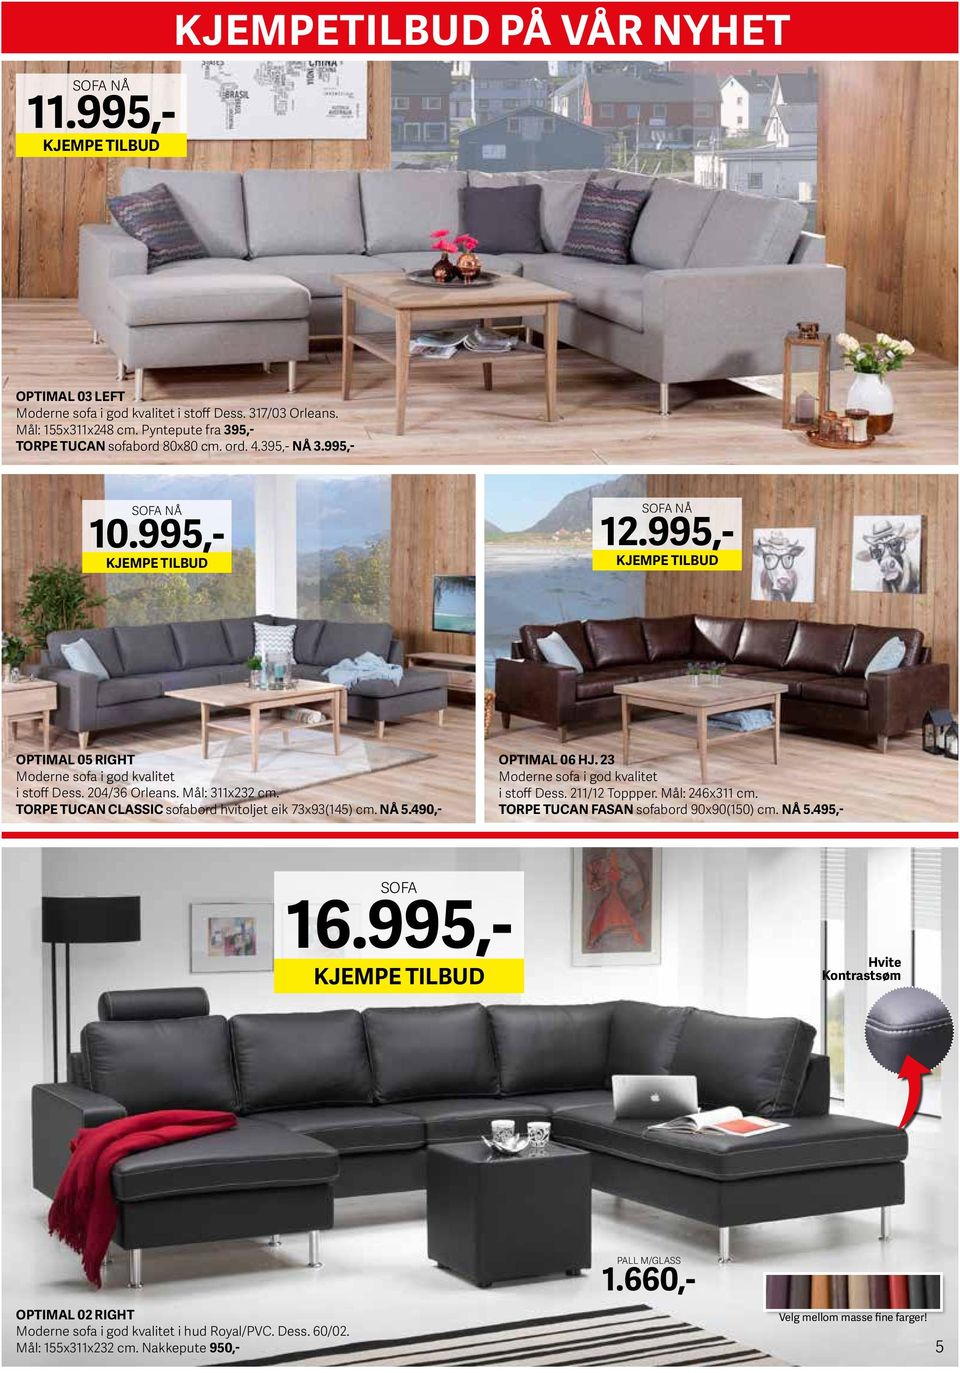 NÅ 5.490,- OPTIMAL 06 HJ. 23 Moderne sofa i god kvalitet i stoff Dess. 211/12 Toppper. Mål: 246x311 cm. TORPE TUCAN FASAN sofabord 90x90(150) cm. NÅ 5.